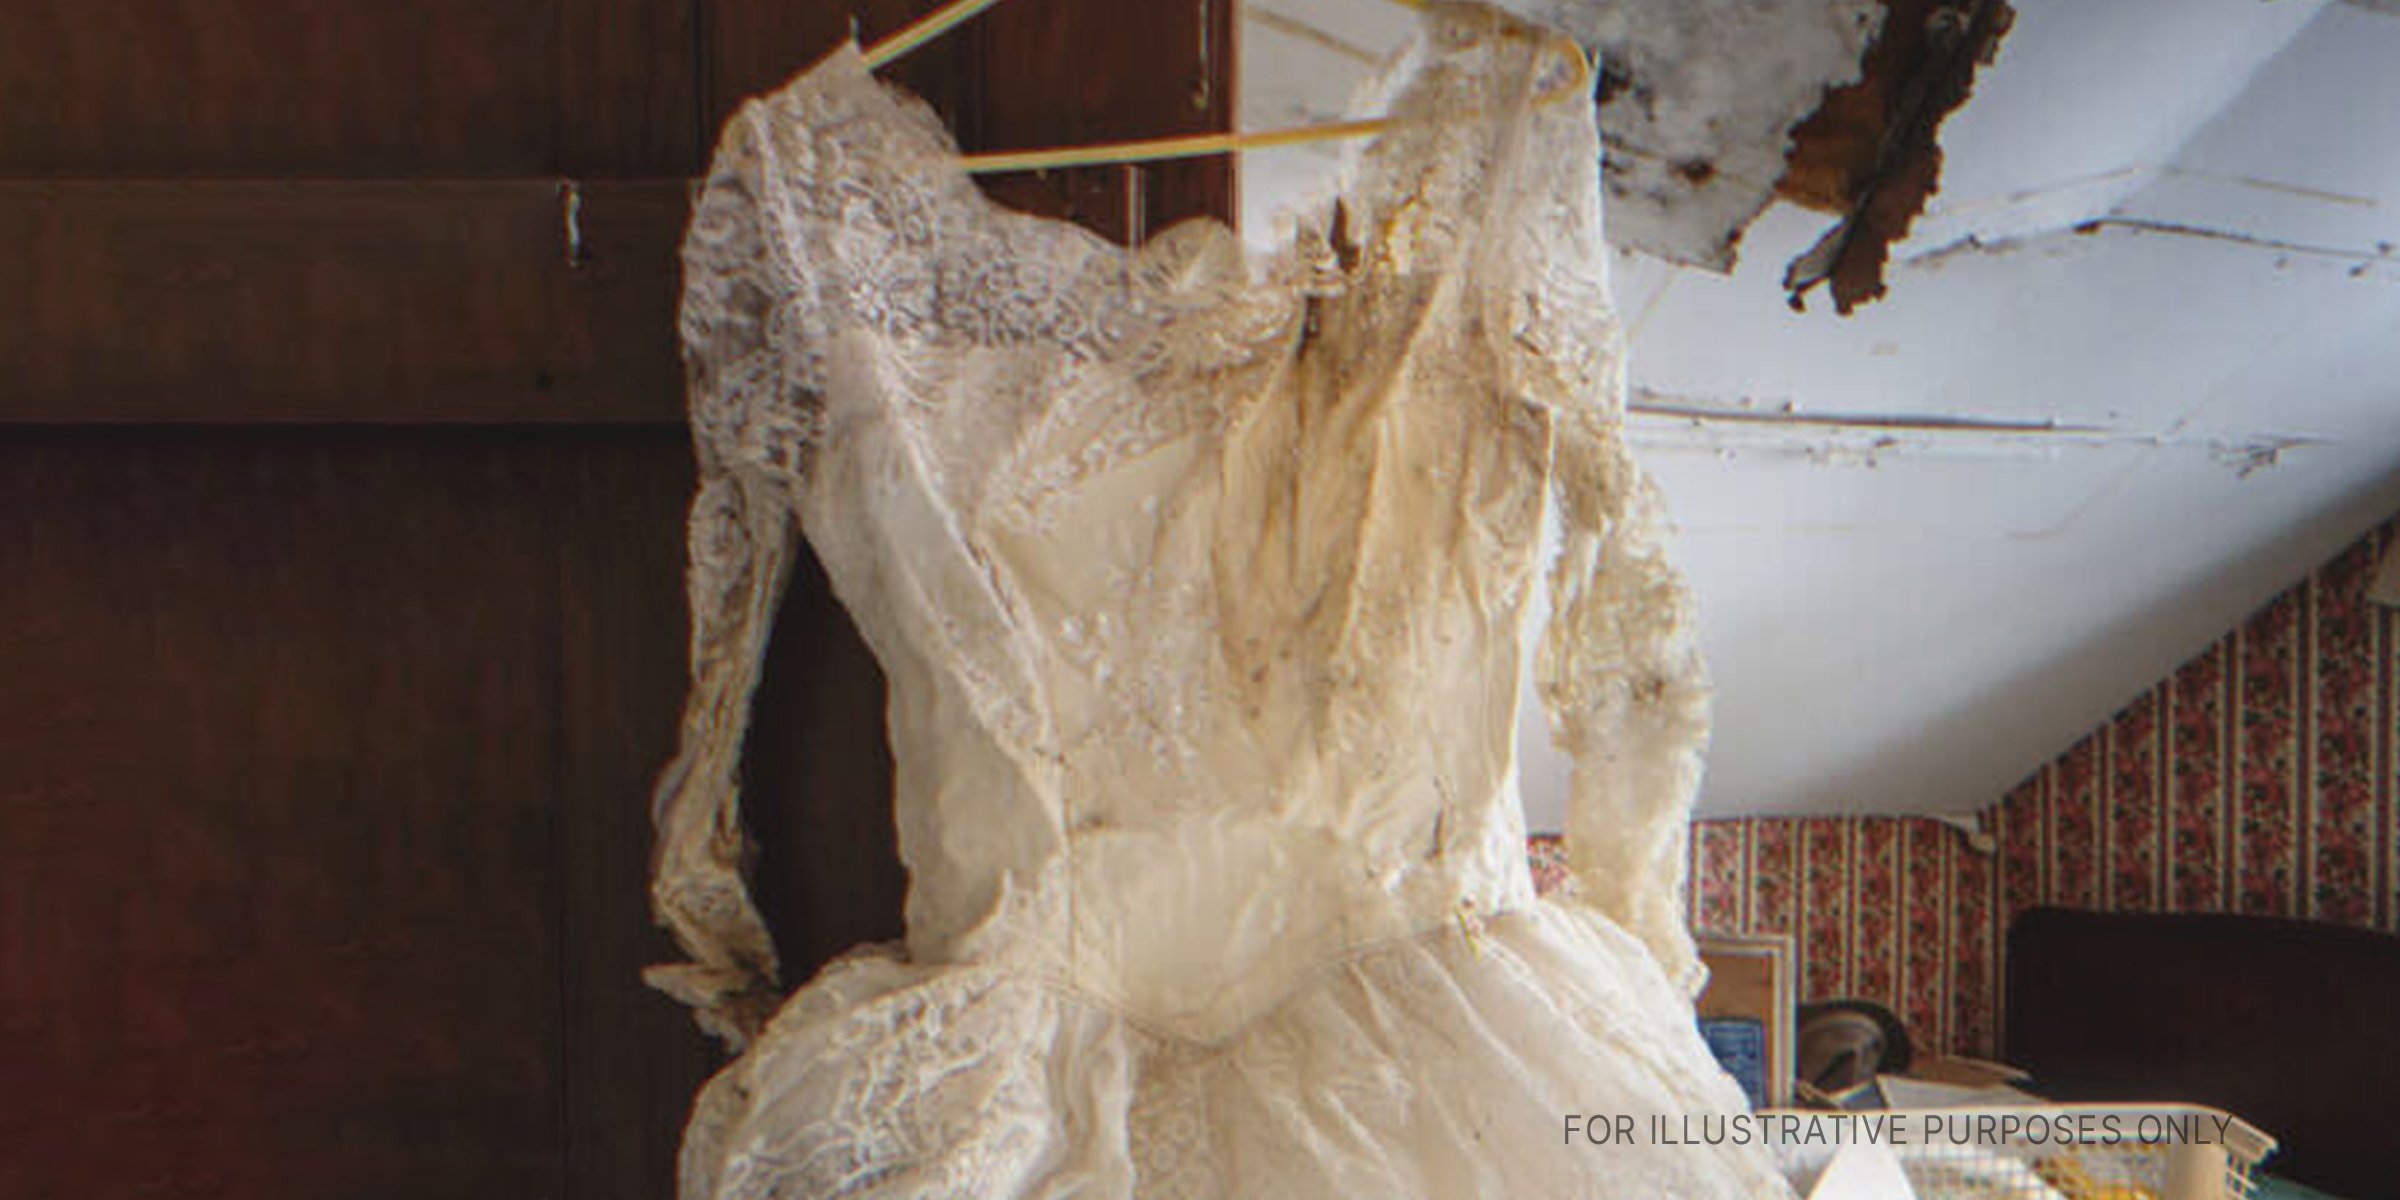 Tattered wedding dress | Source: Shuttershock